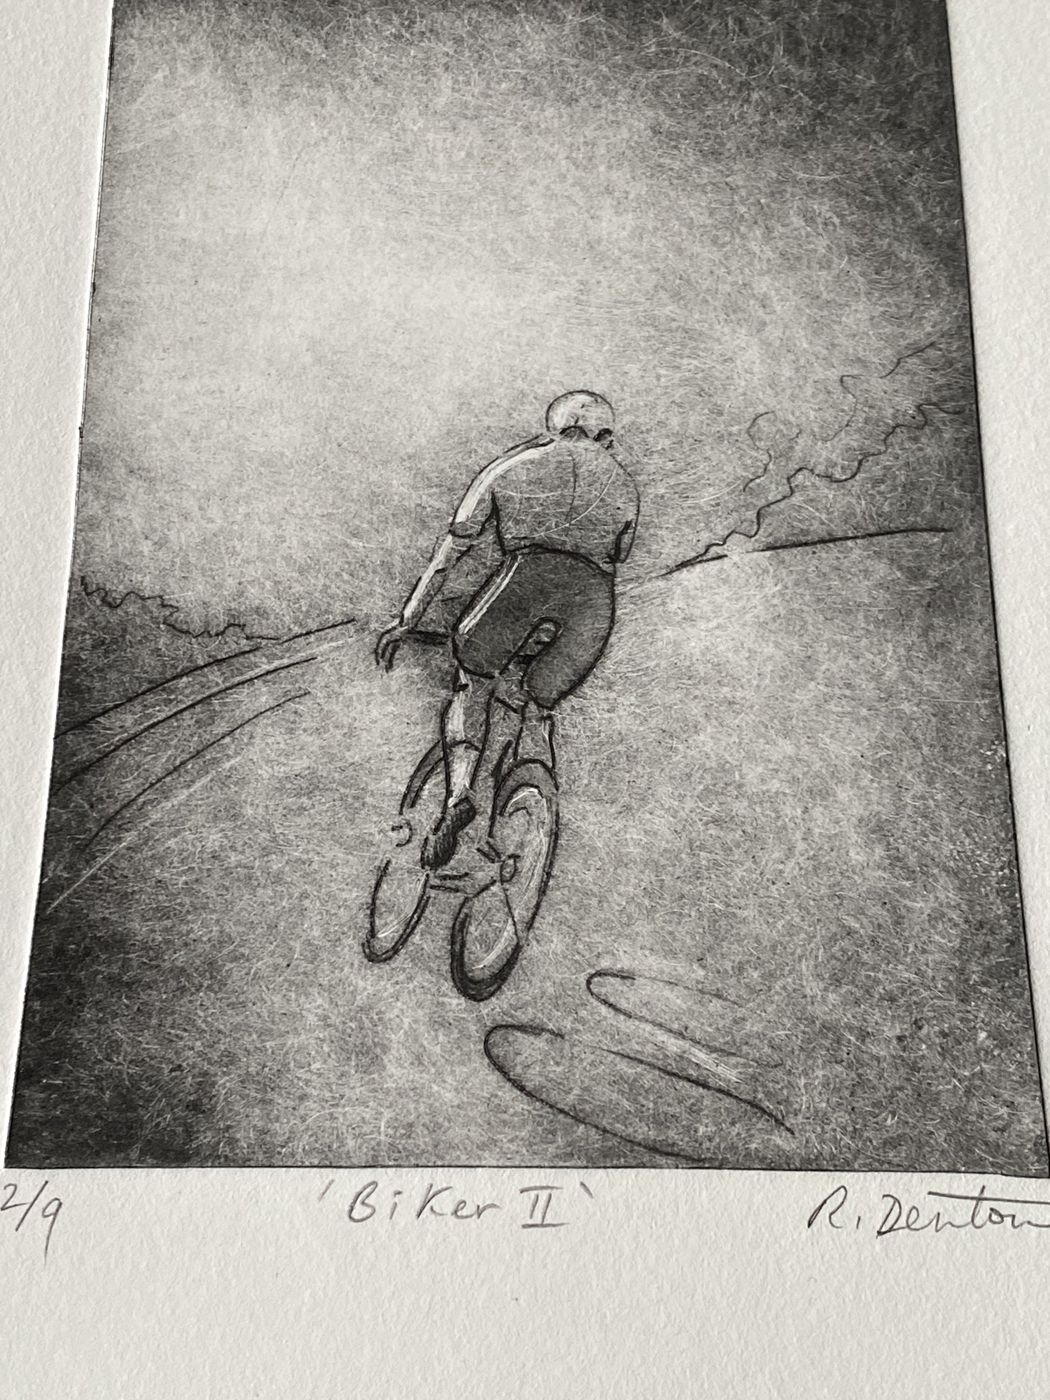 Cyclist II by Rebecca Denton - Secondary Image